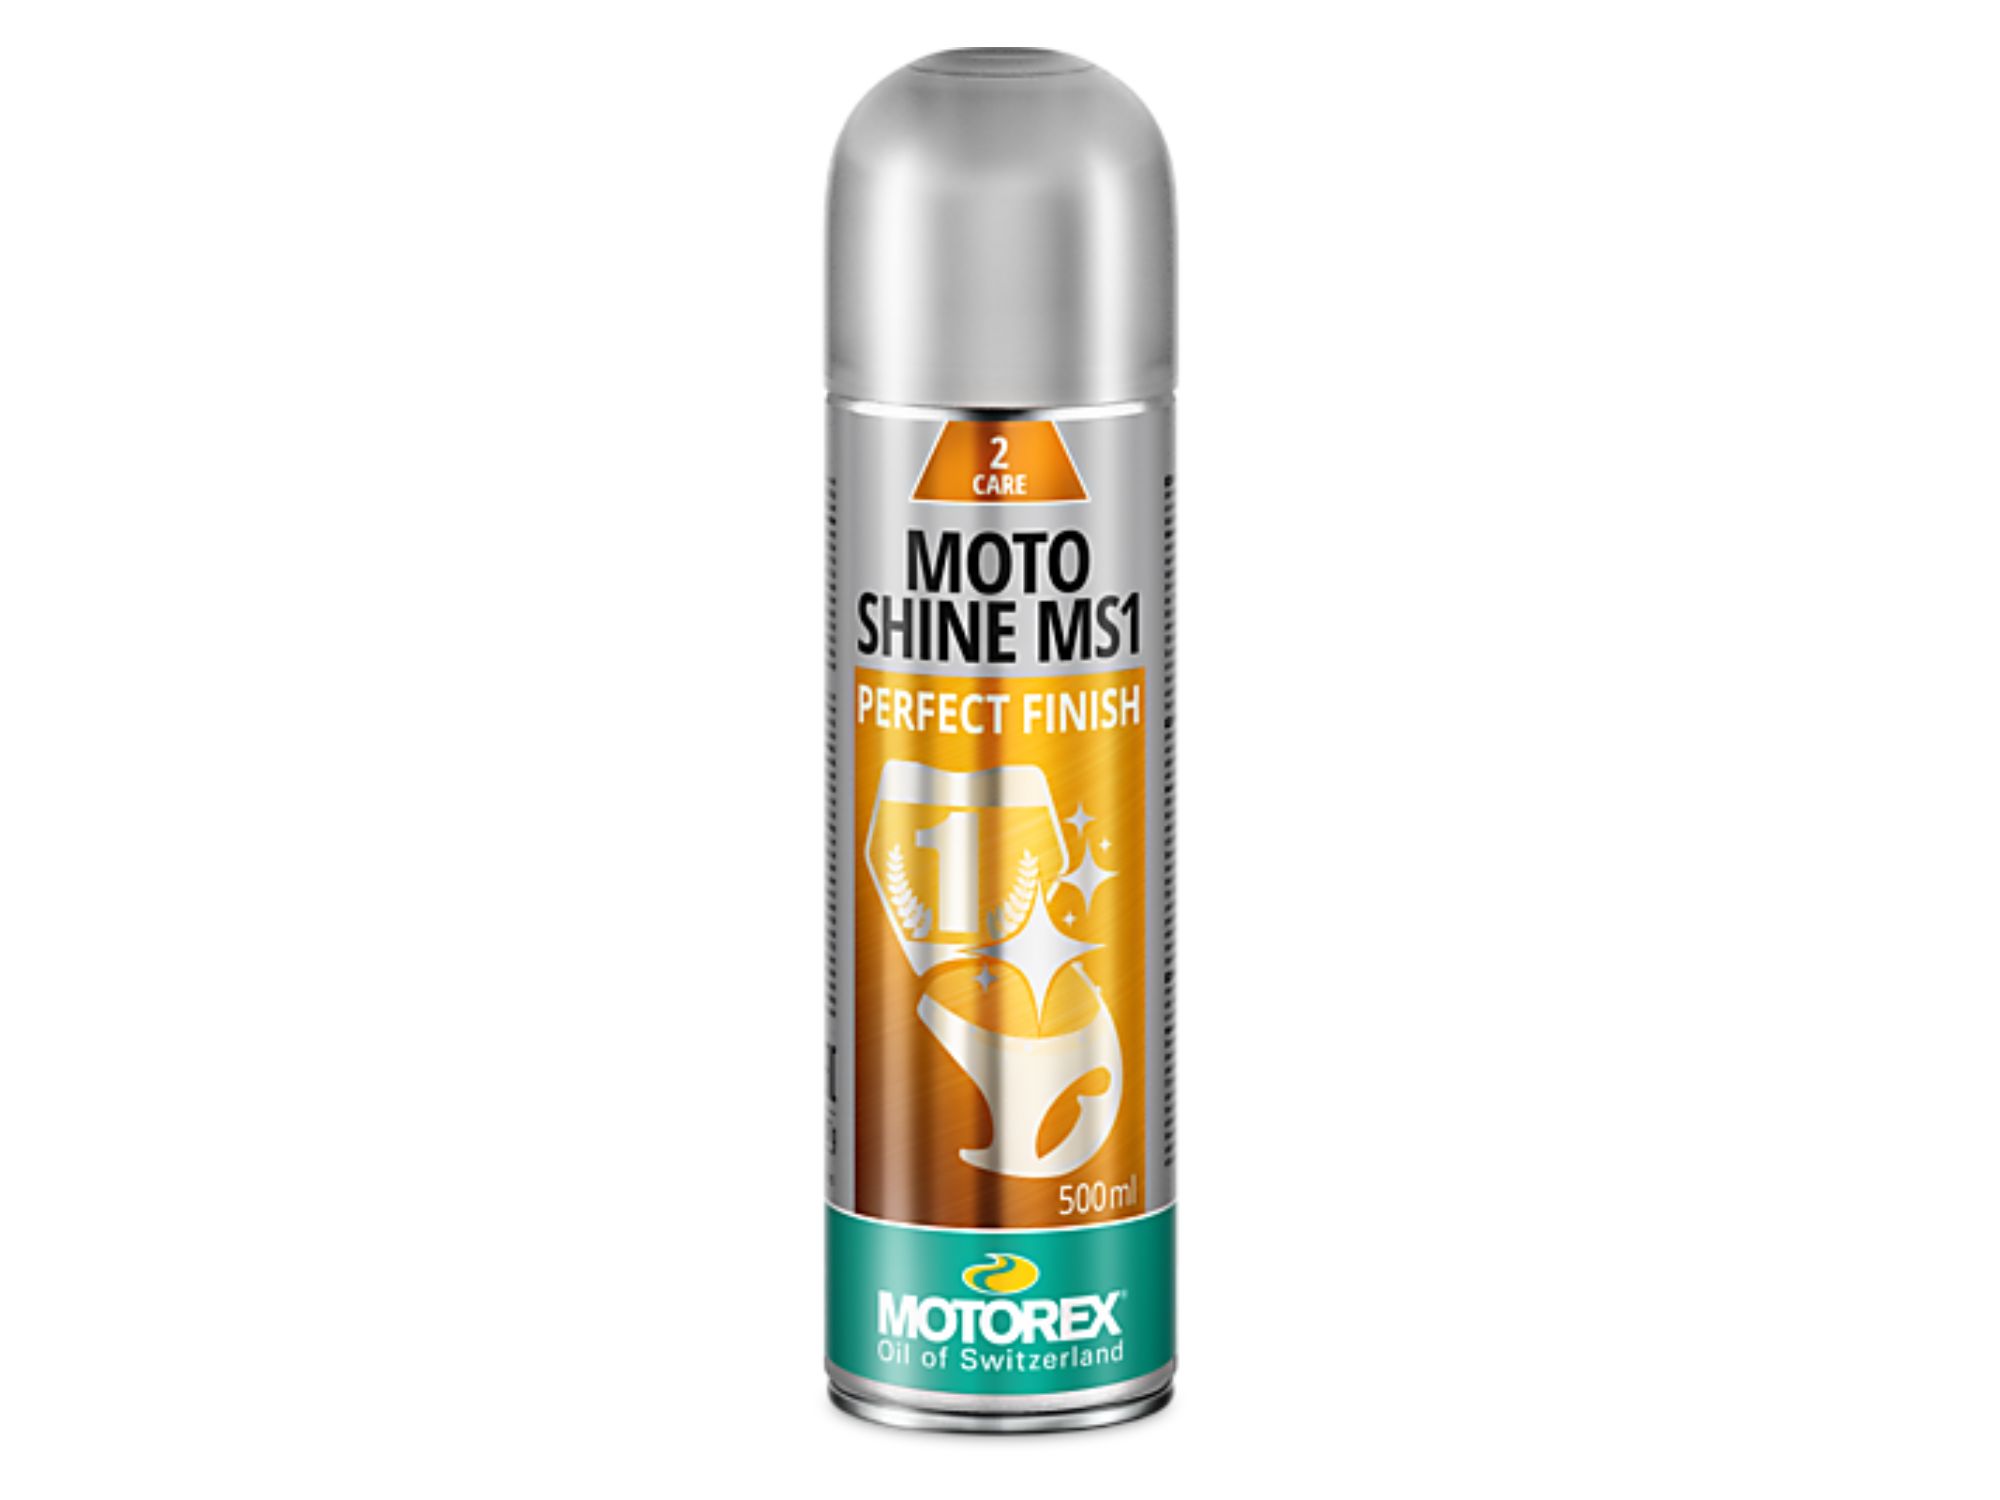 Motorex Moto Shine MS1 Glanzspray 500ml